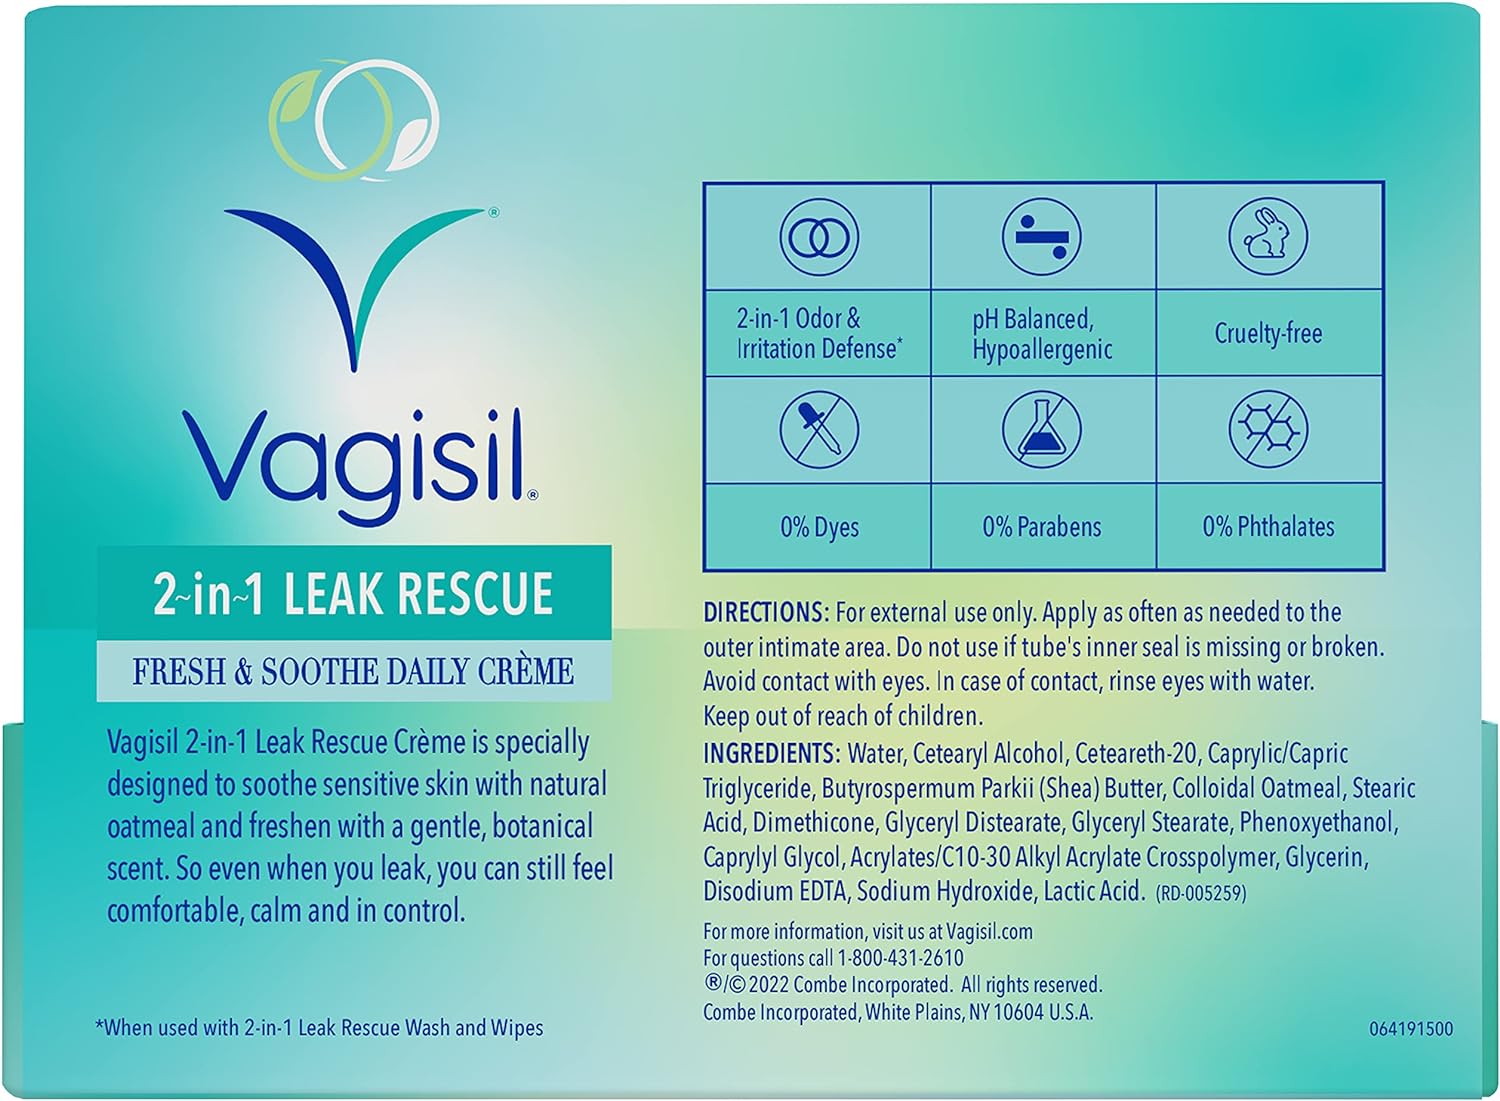 Vagisil 2-in-1 Leak Rescue Intimate Feminine Cream for Women, Gynecologist Tested & Hypoallergenic, 1 oz (Pack of 1) : Health & Household